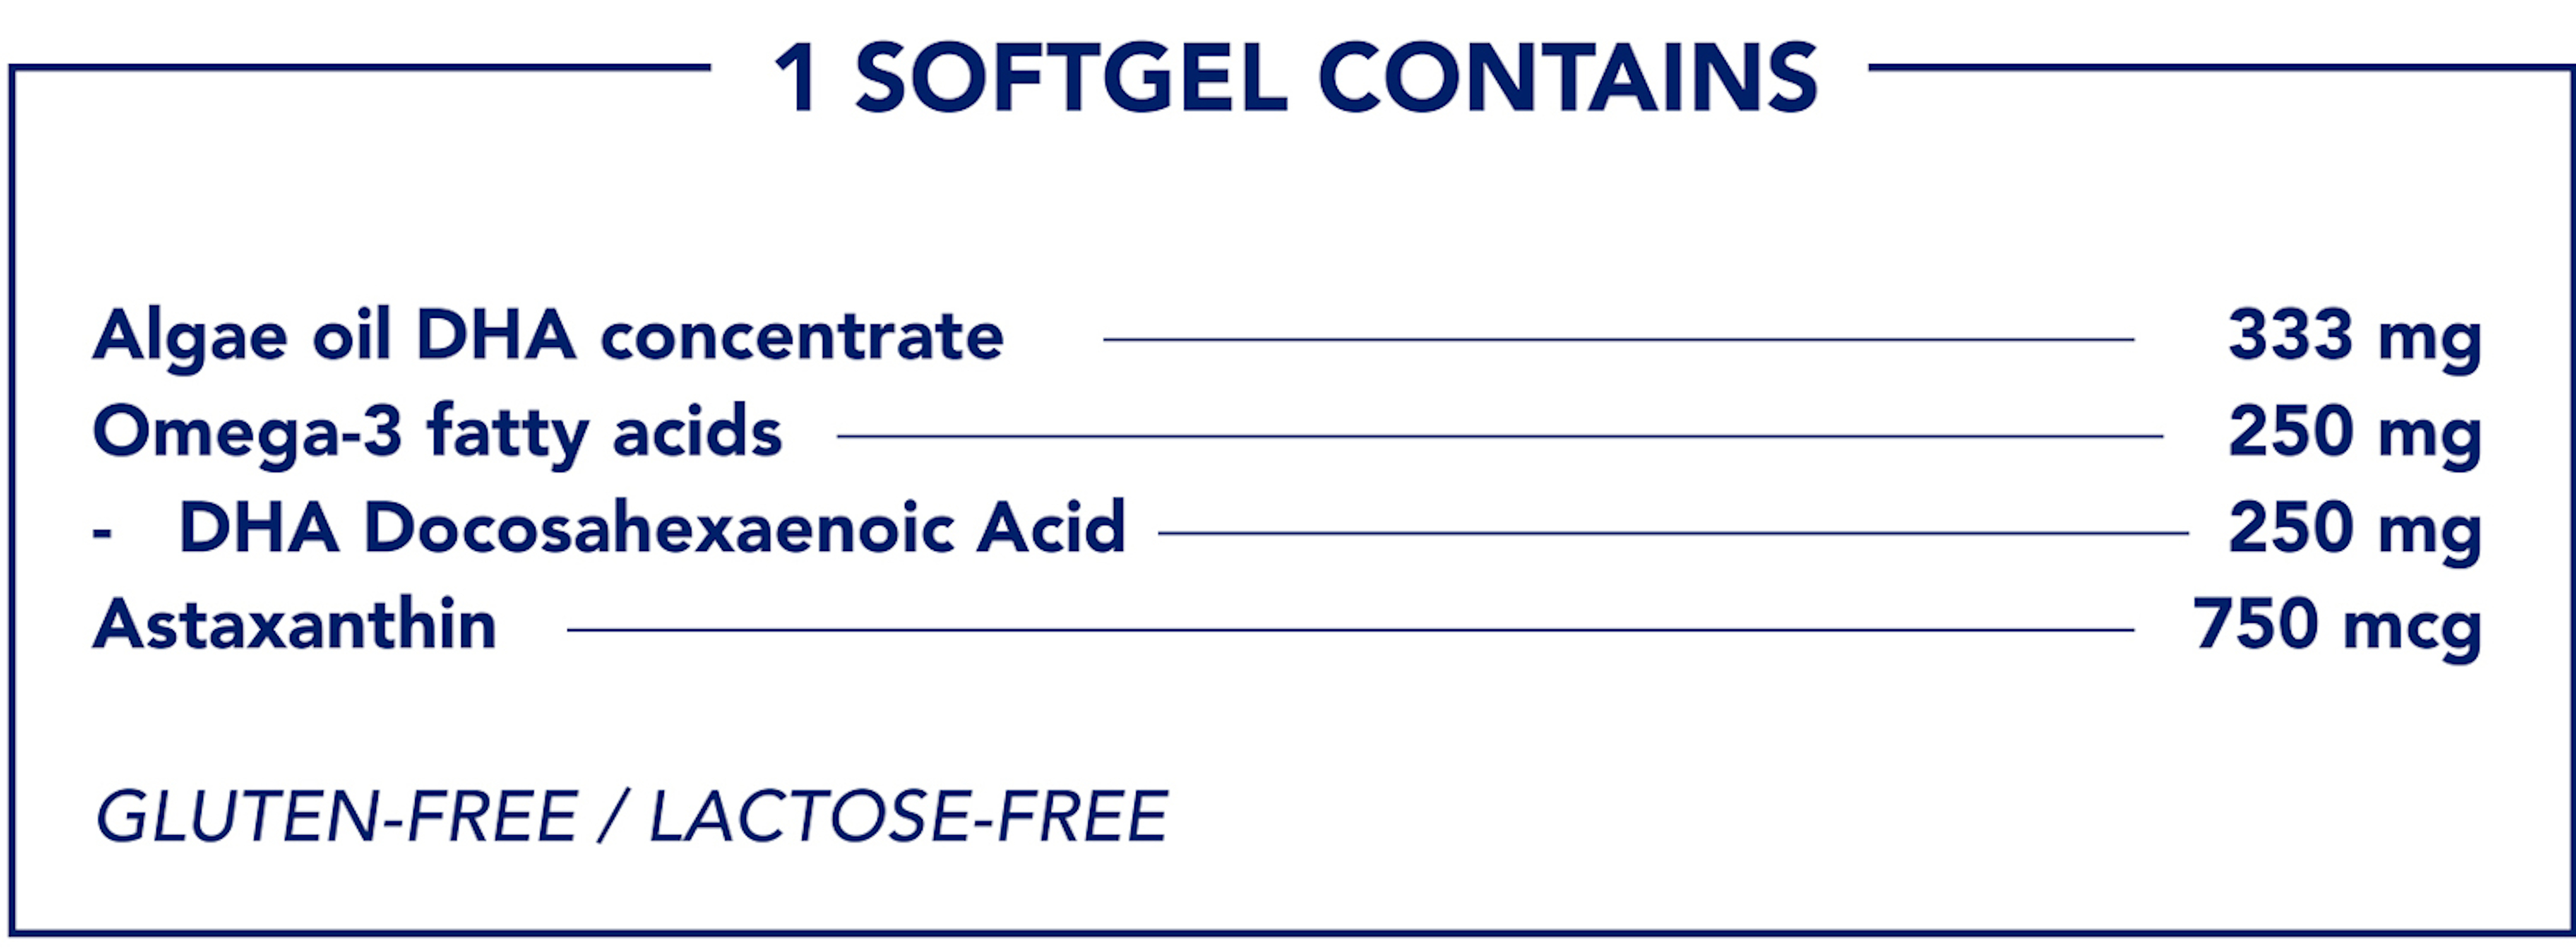 1 SOFTGEL CONTAINS:Algae oil DHA concentrate 333 mgOmega-3 fatty acids 250 mgDHA Docosahexaenoic Acid 250 mgAstaxanthin 750 mcgGLUTEN-FREE / LACTOSE-FREE